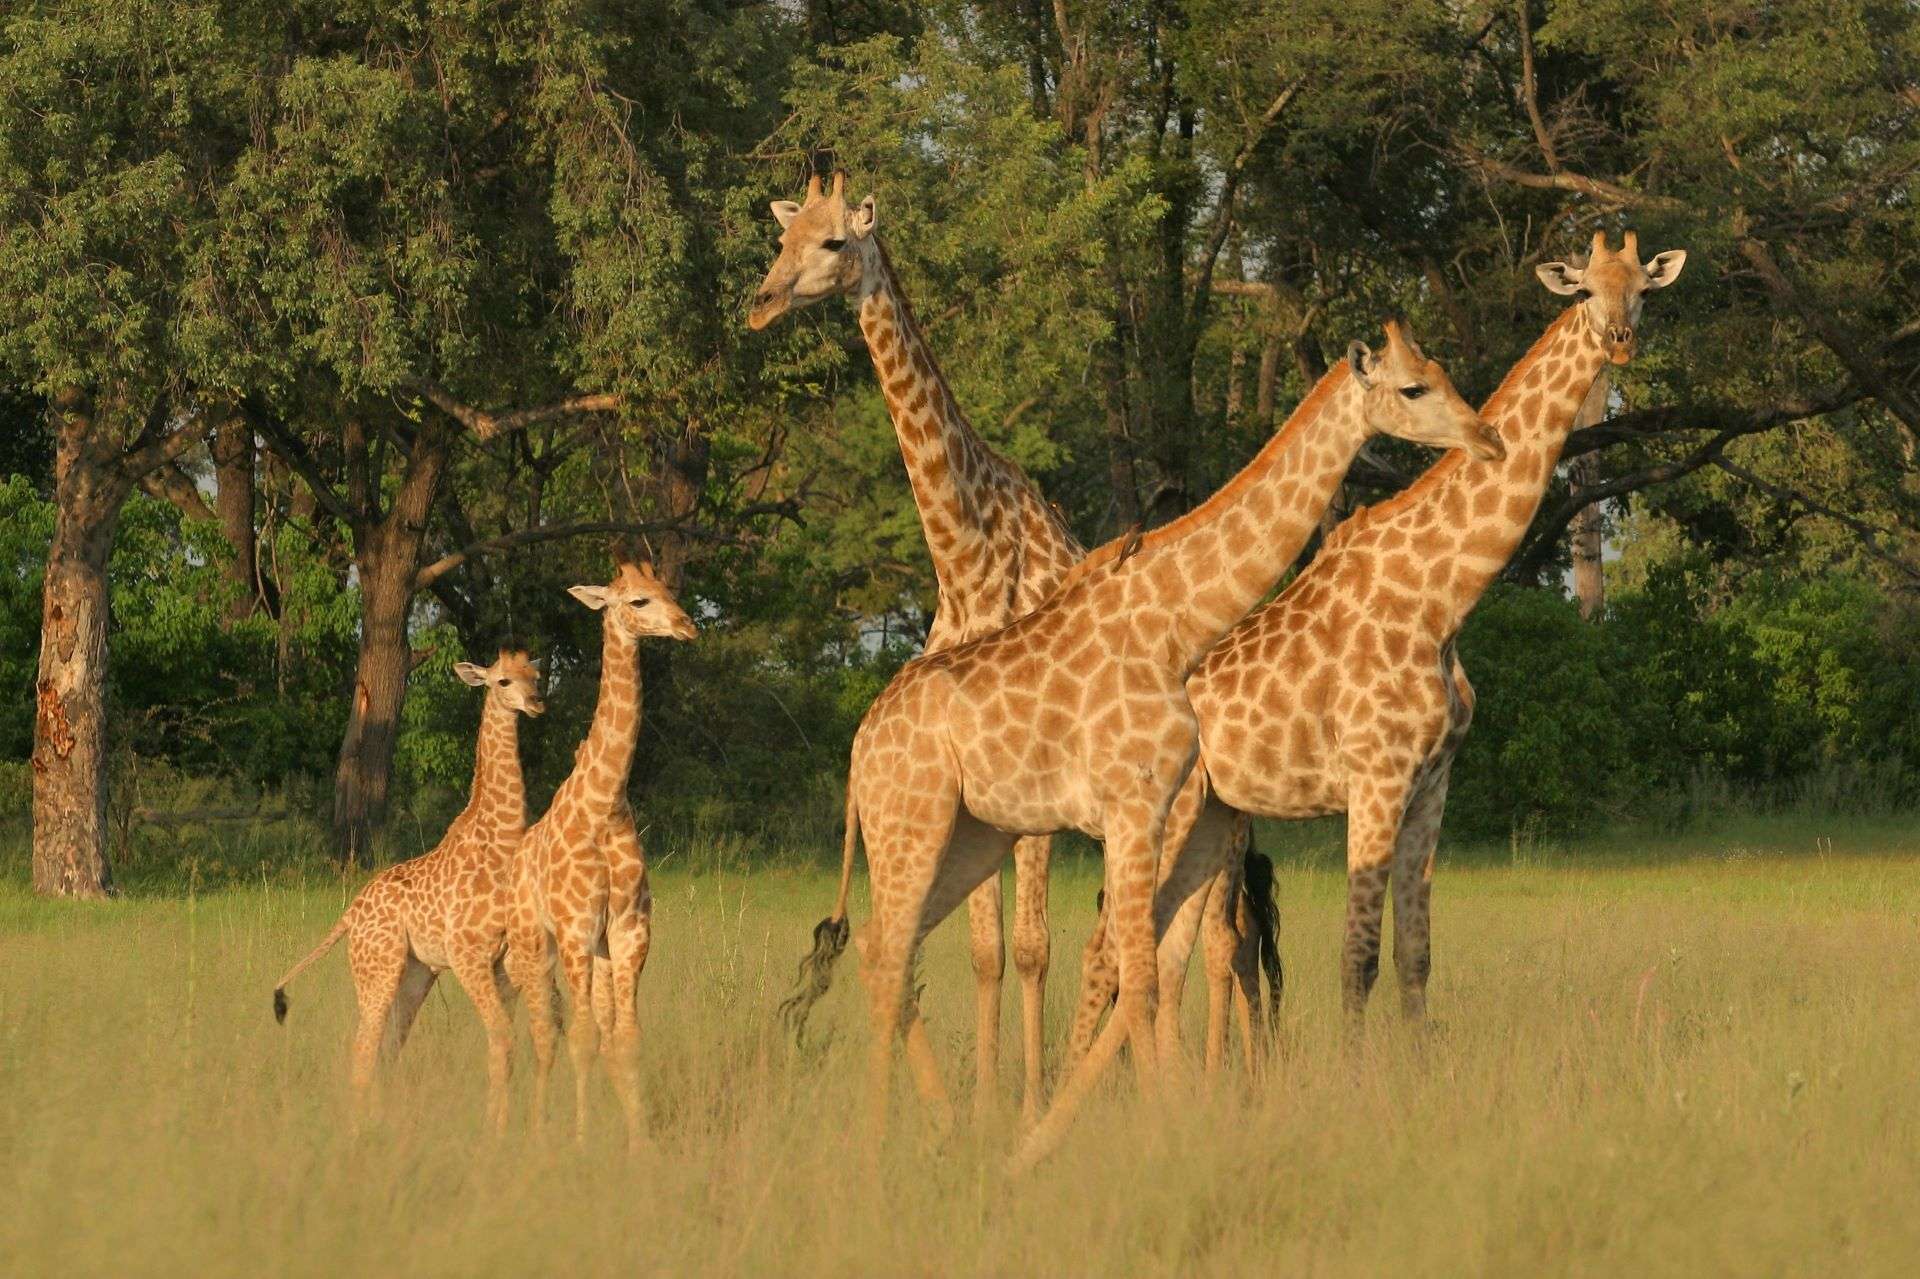 Giraffes with babies Botswana Africa